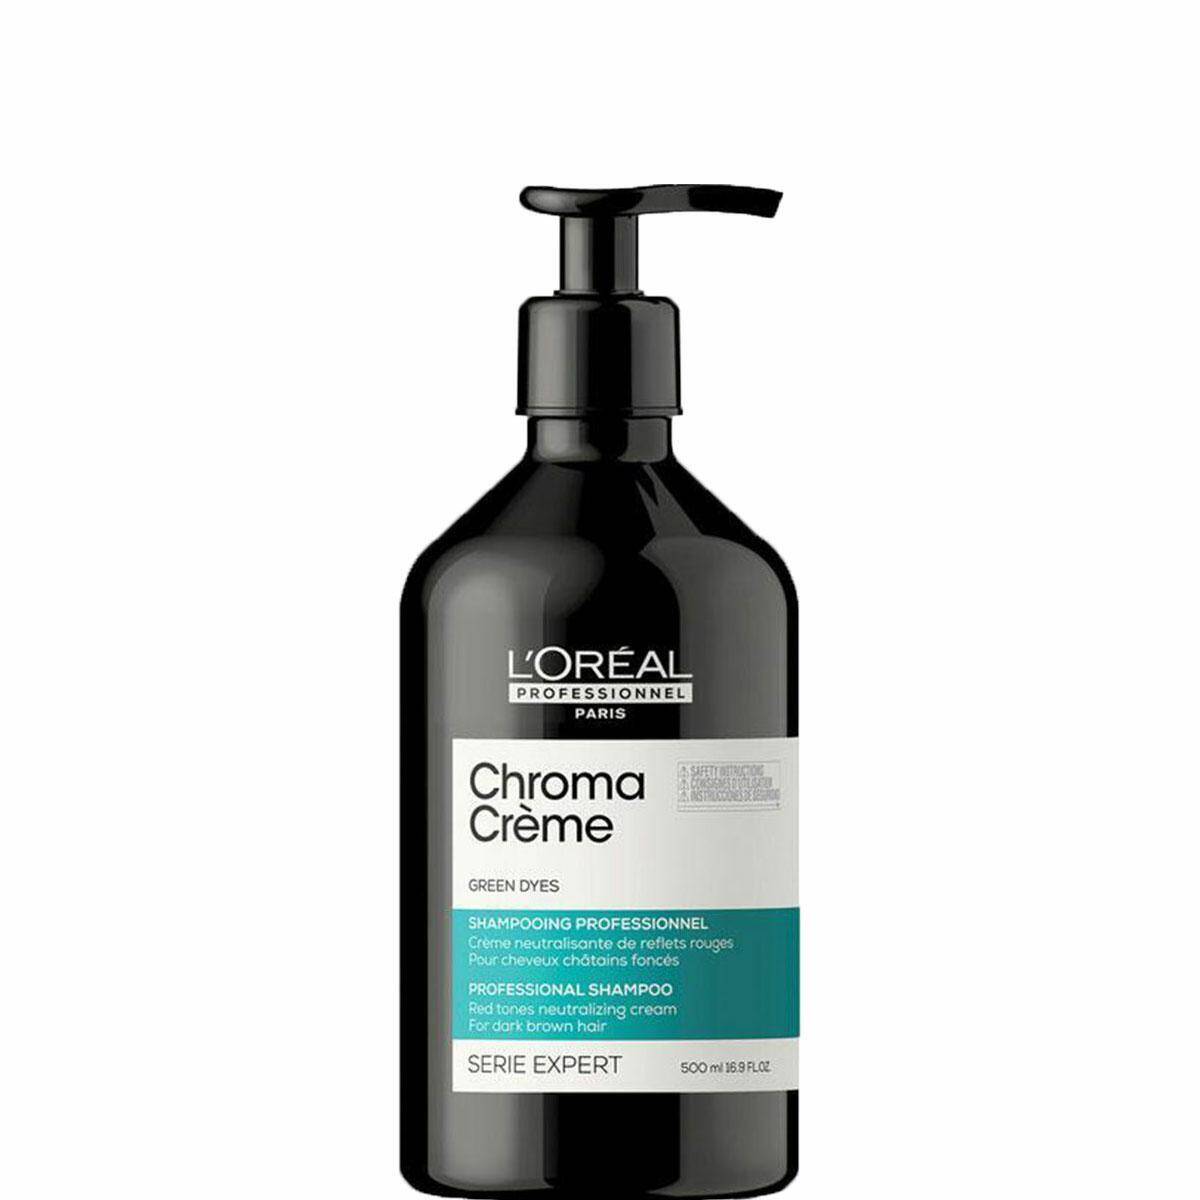 szampon loreal promocja